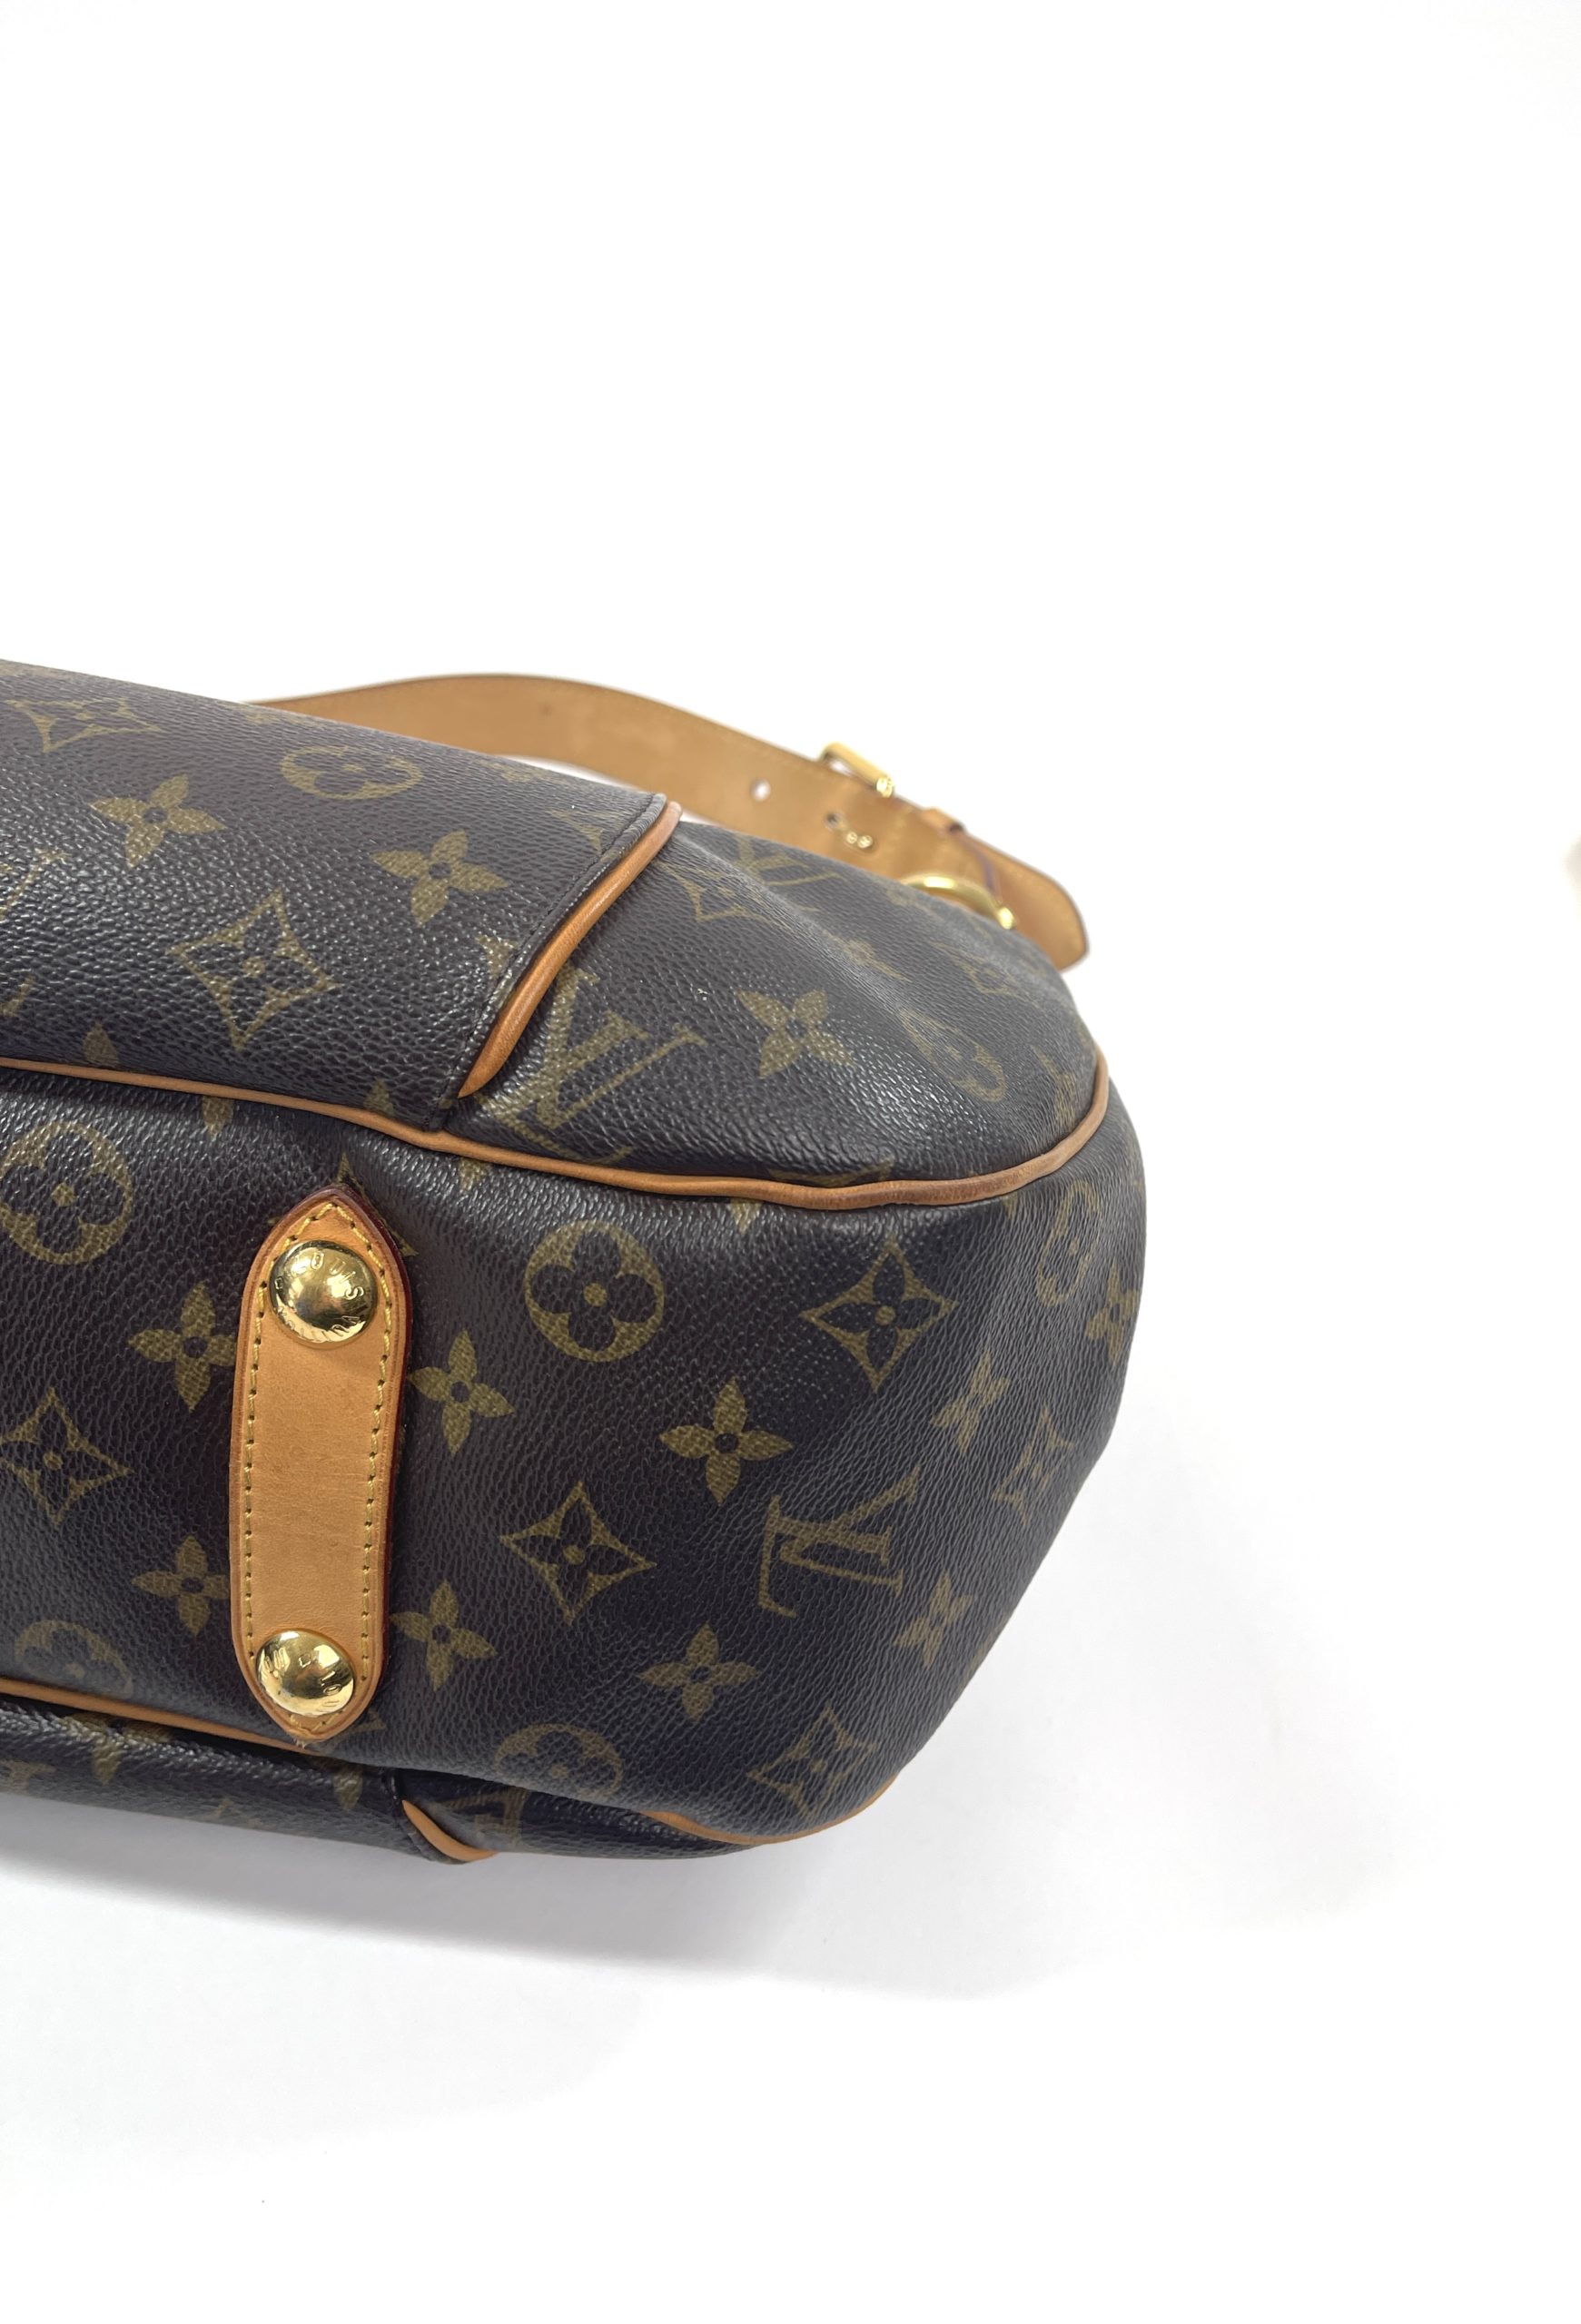 RARE Louis Vuitton Galliera PM Shoulder Bag - Damier Ebene Special